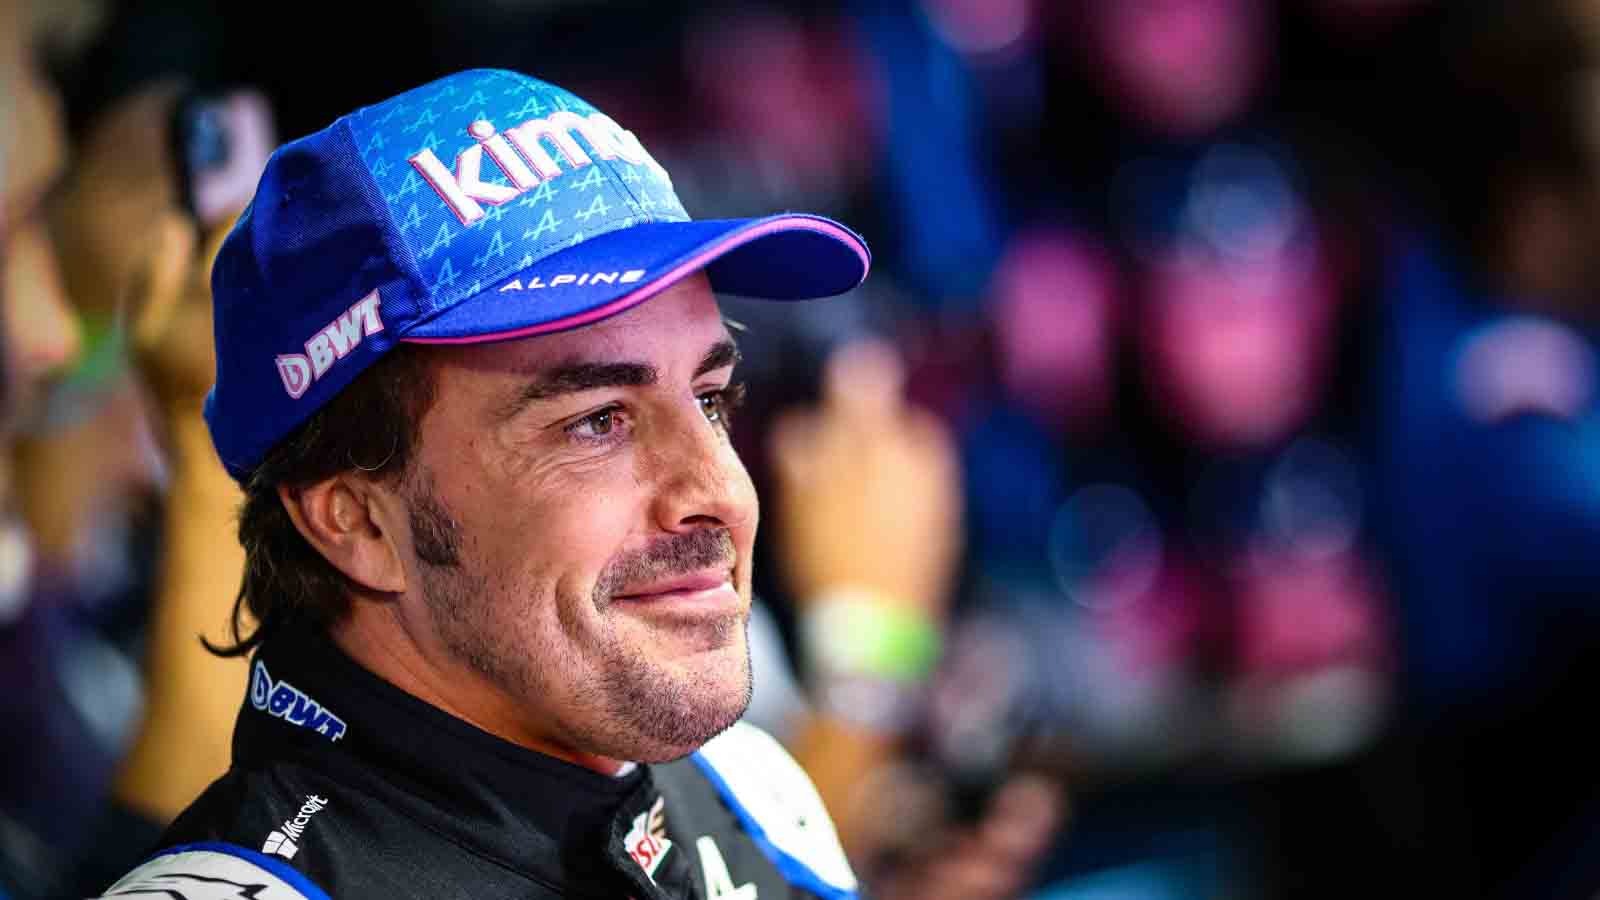 Fernando Alonso is interviewed. Monza September 2022.